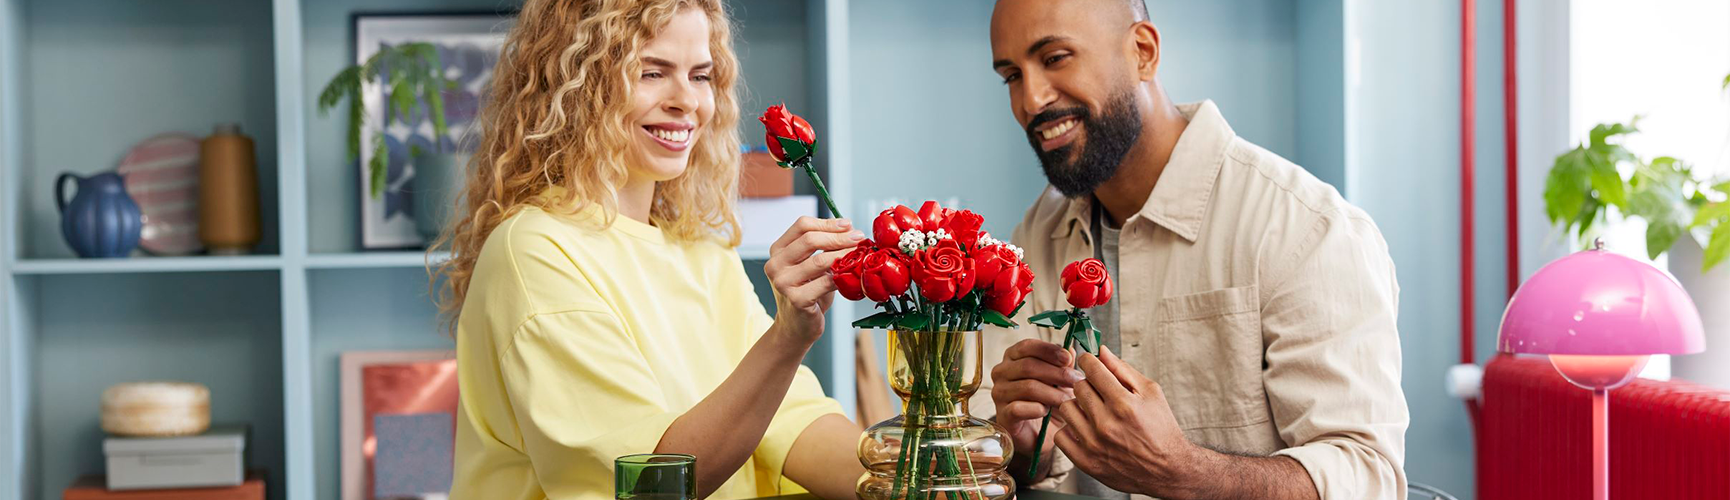 La colección botánica LEGO® florece con un ramo de rosas